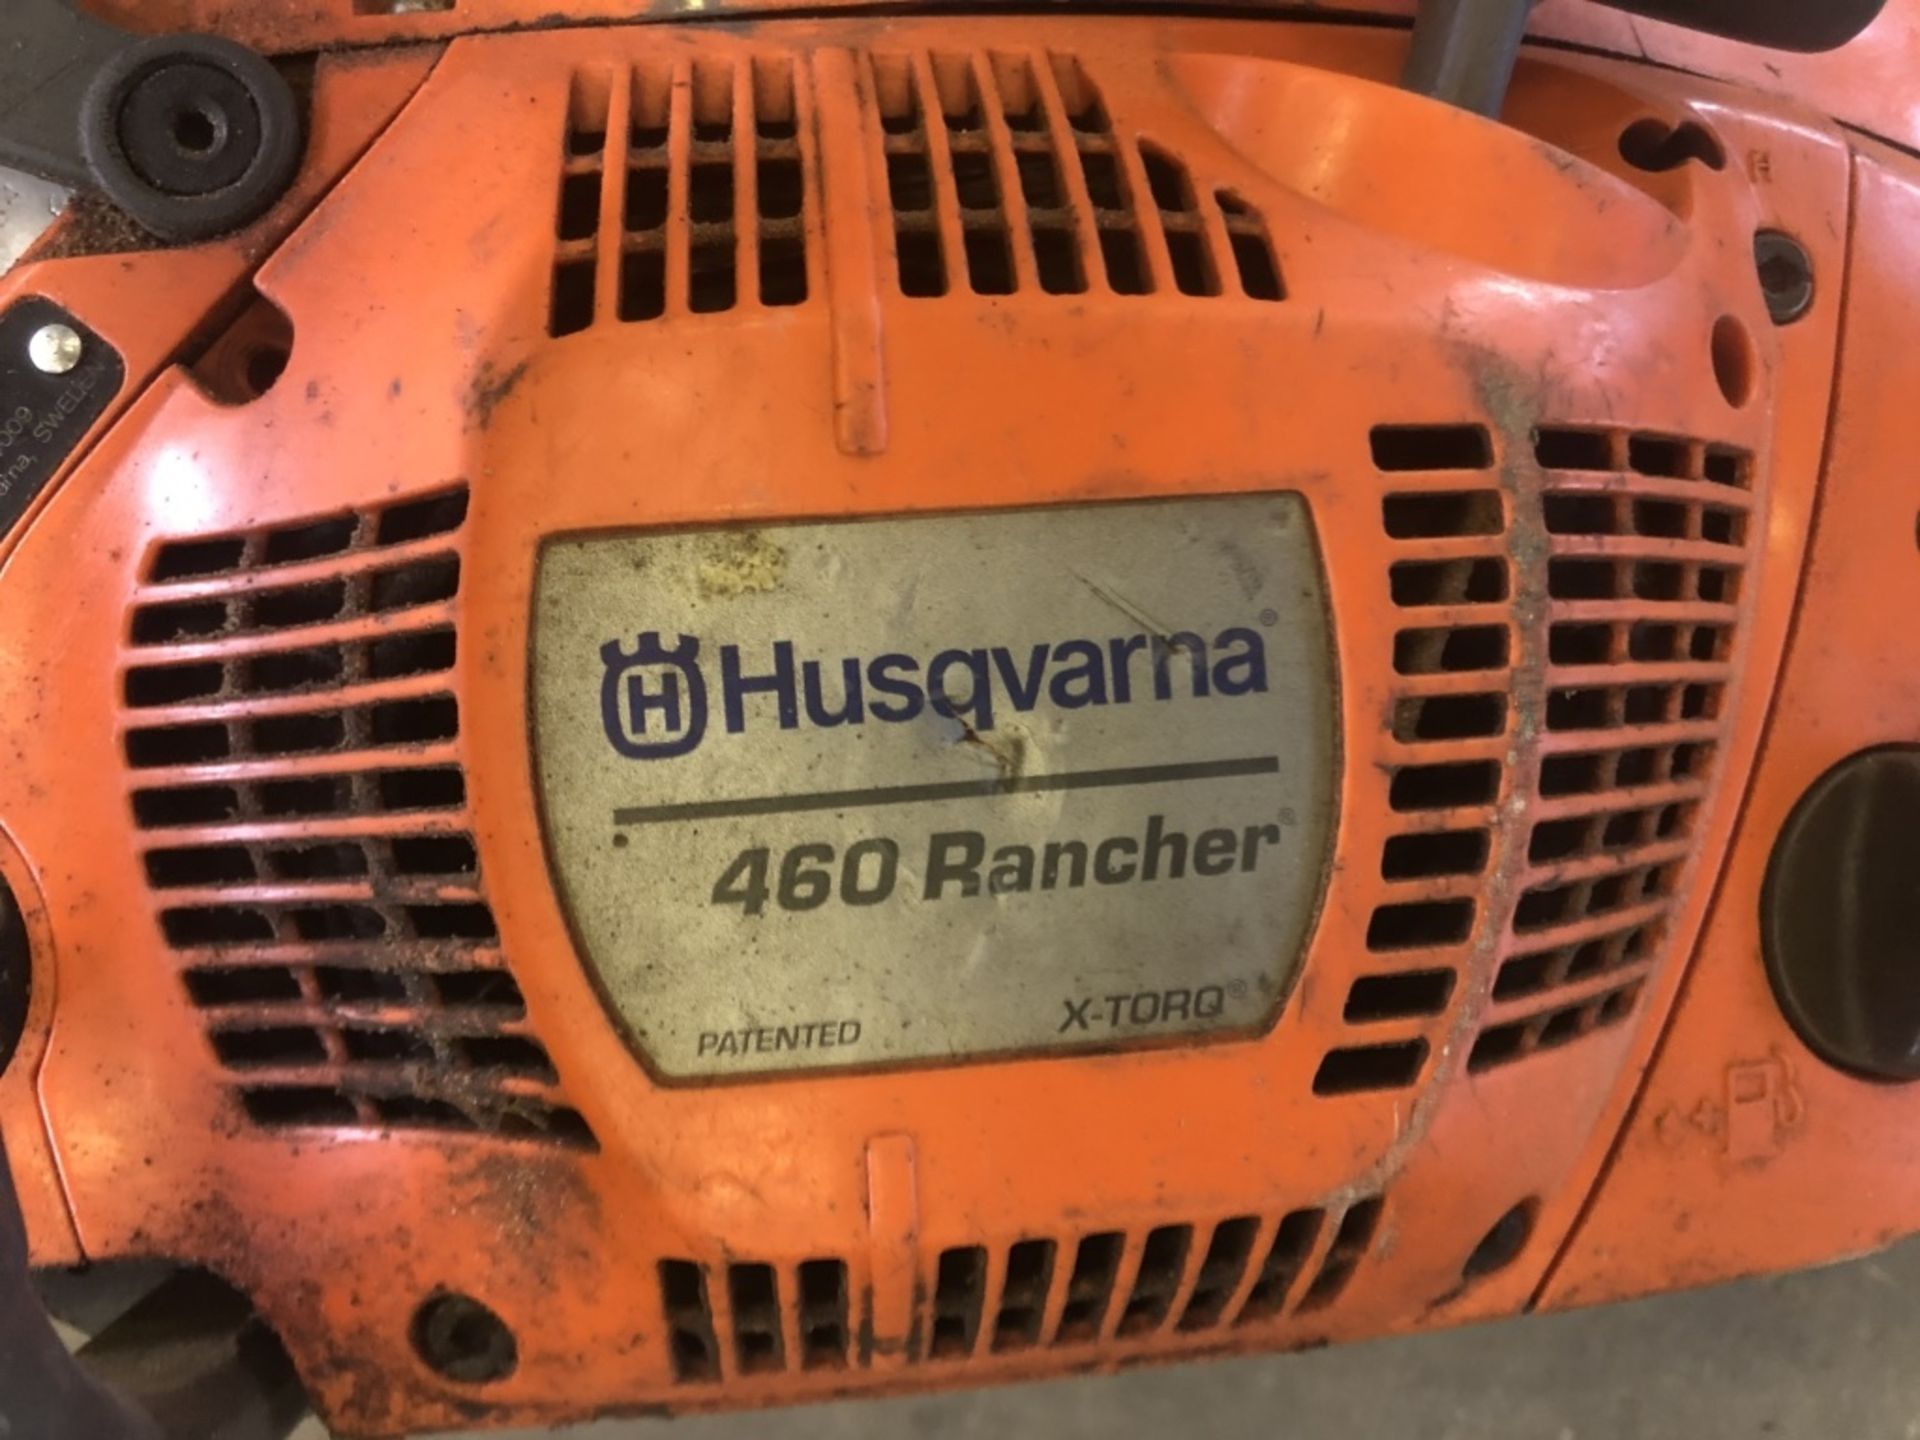 Husqvarna 460 Rancher Chainsaw - Image 4 of 4